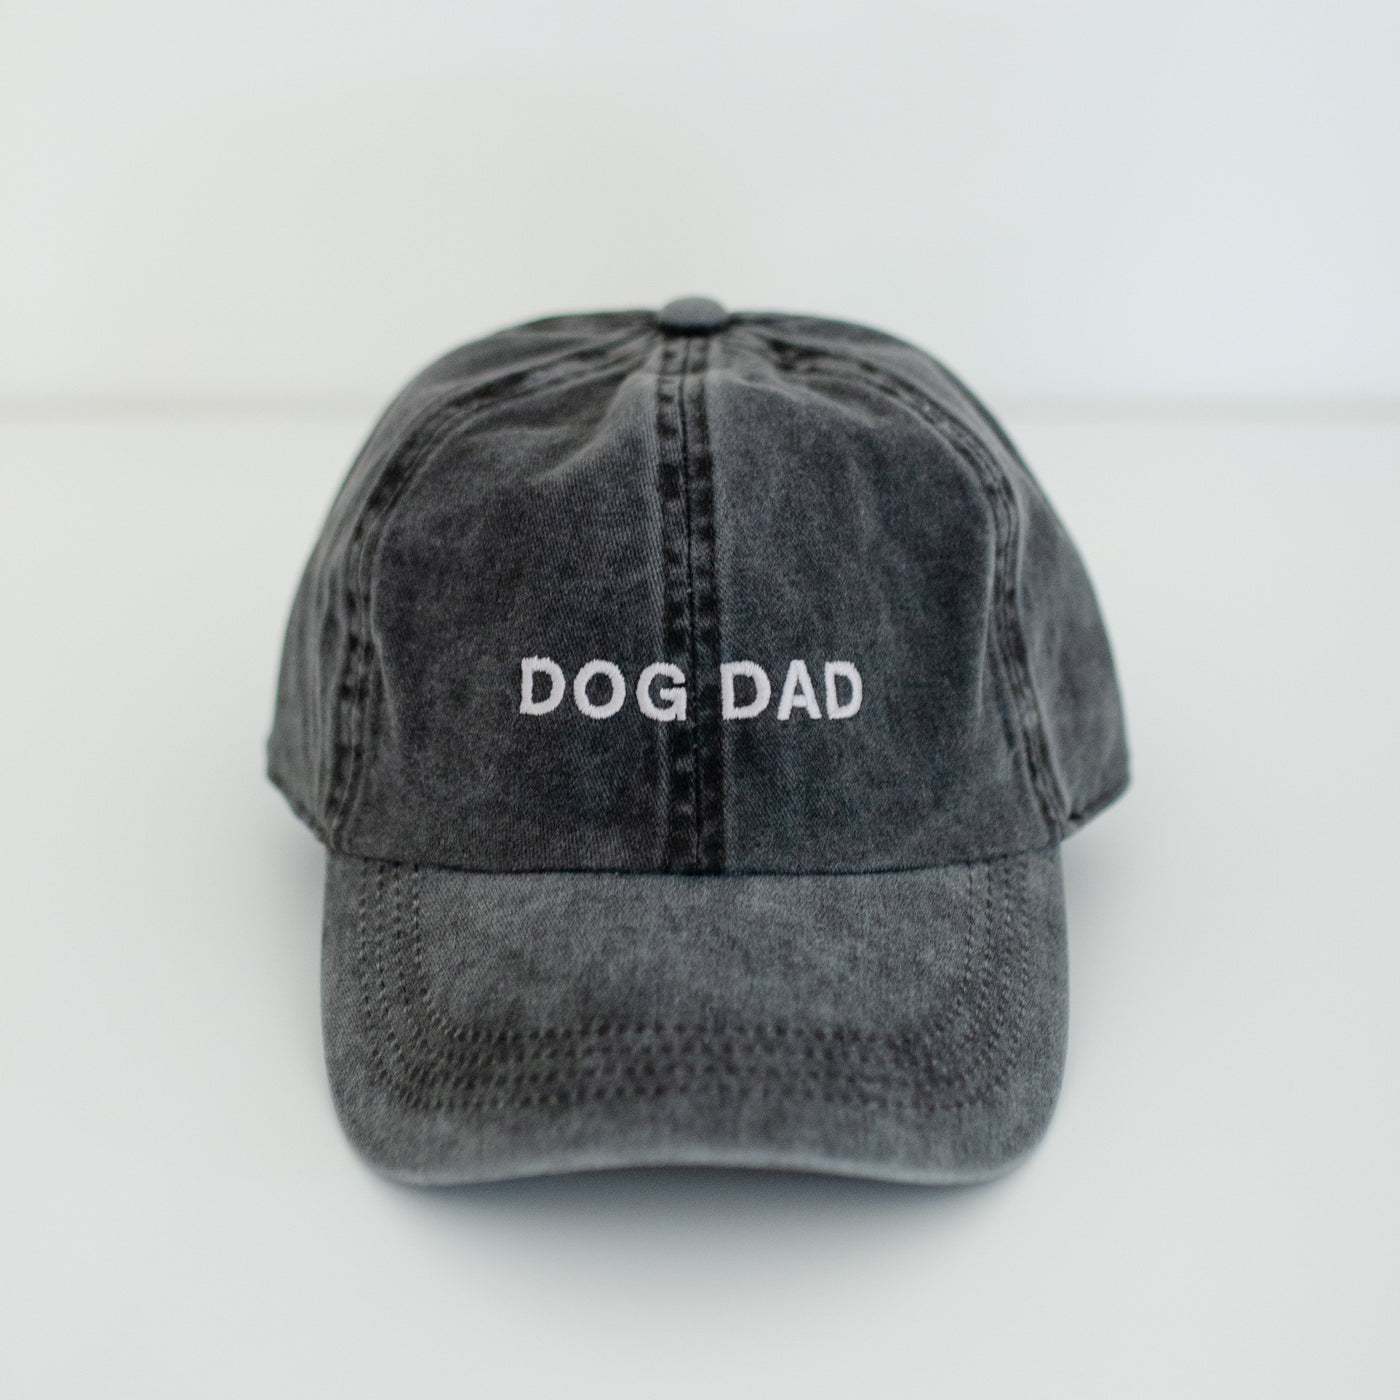 Dog Dad Embroidered Baseball Cap